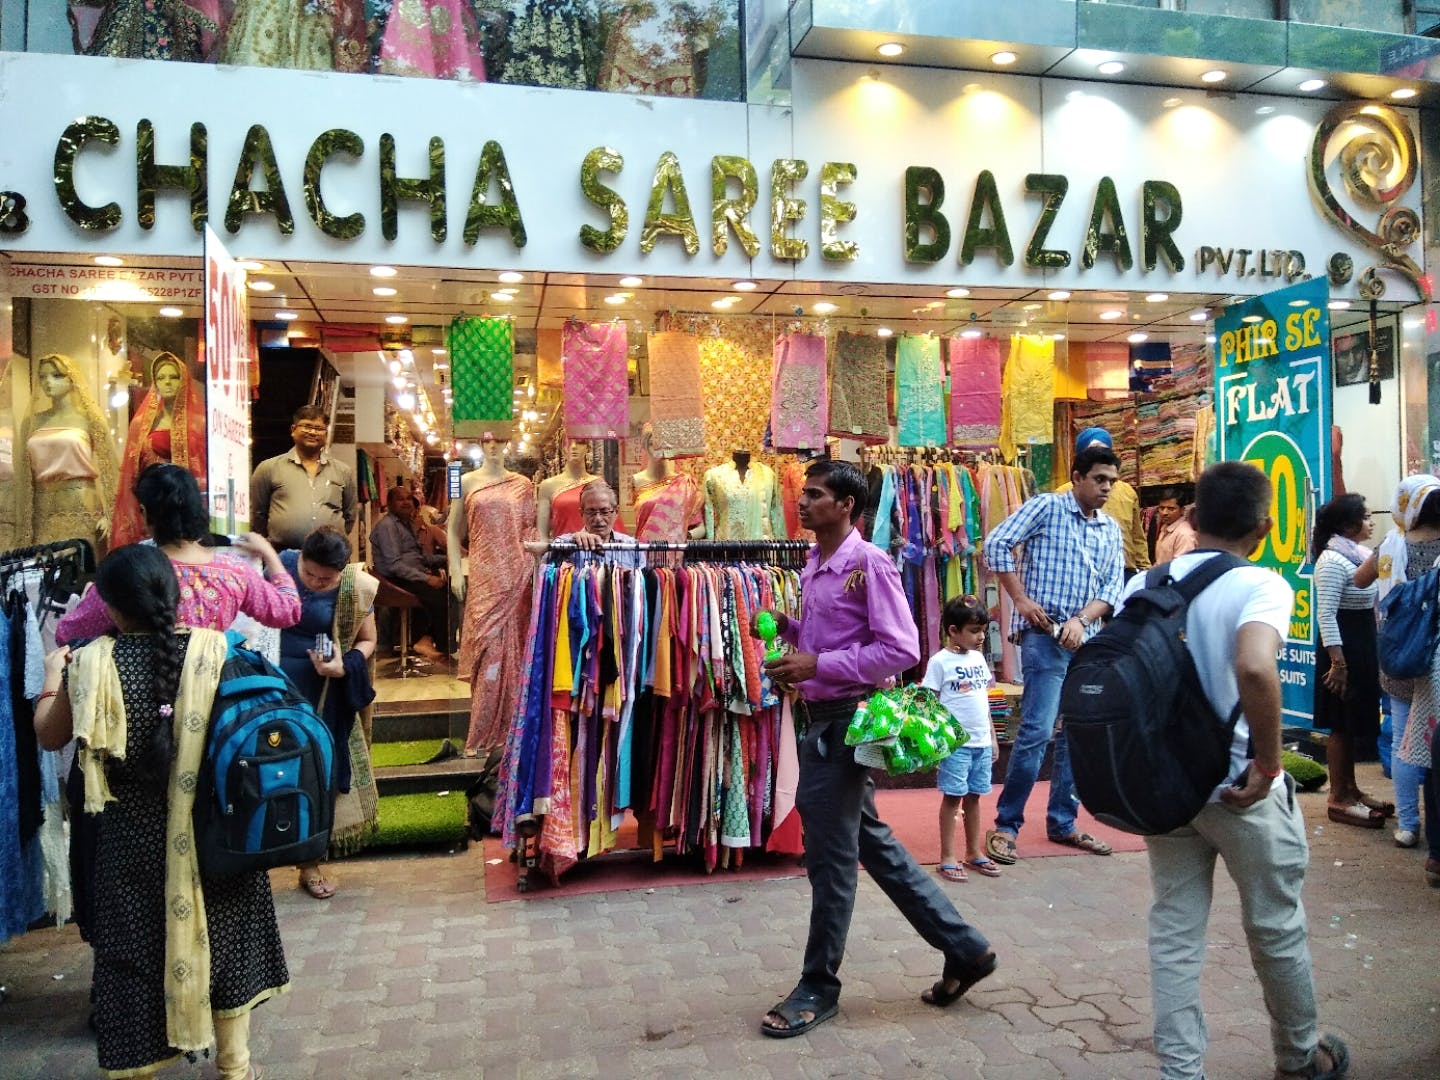 Bazaar,Market,Marketplace,Public space,Shopping,Pedestrian,Street,Building,City,Retail